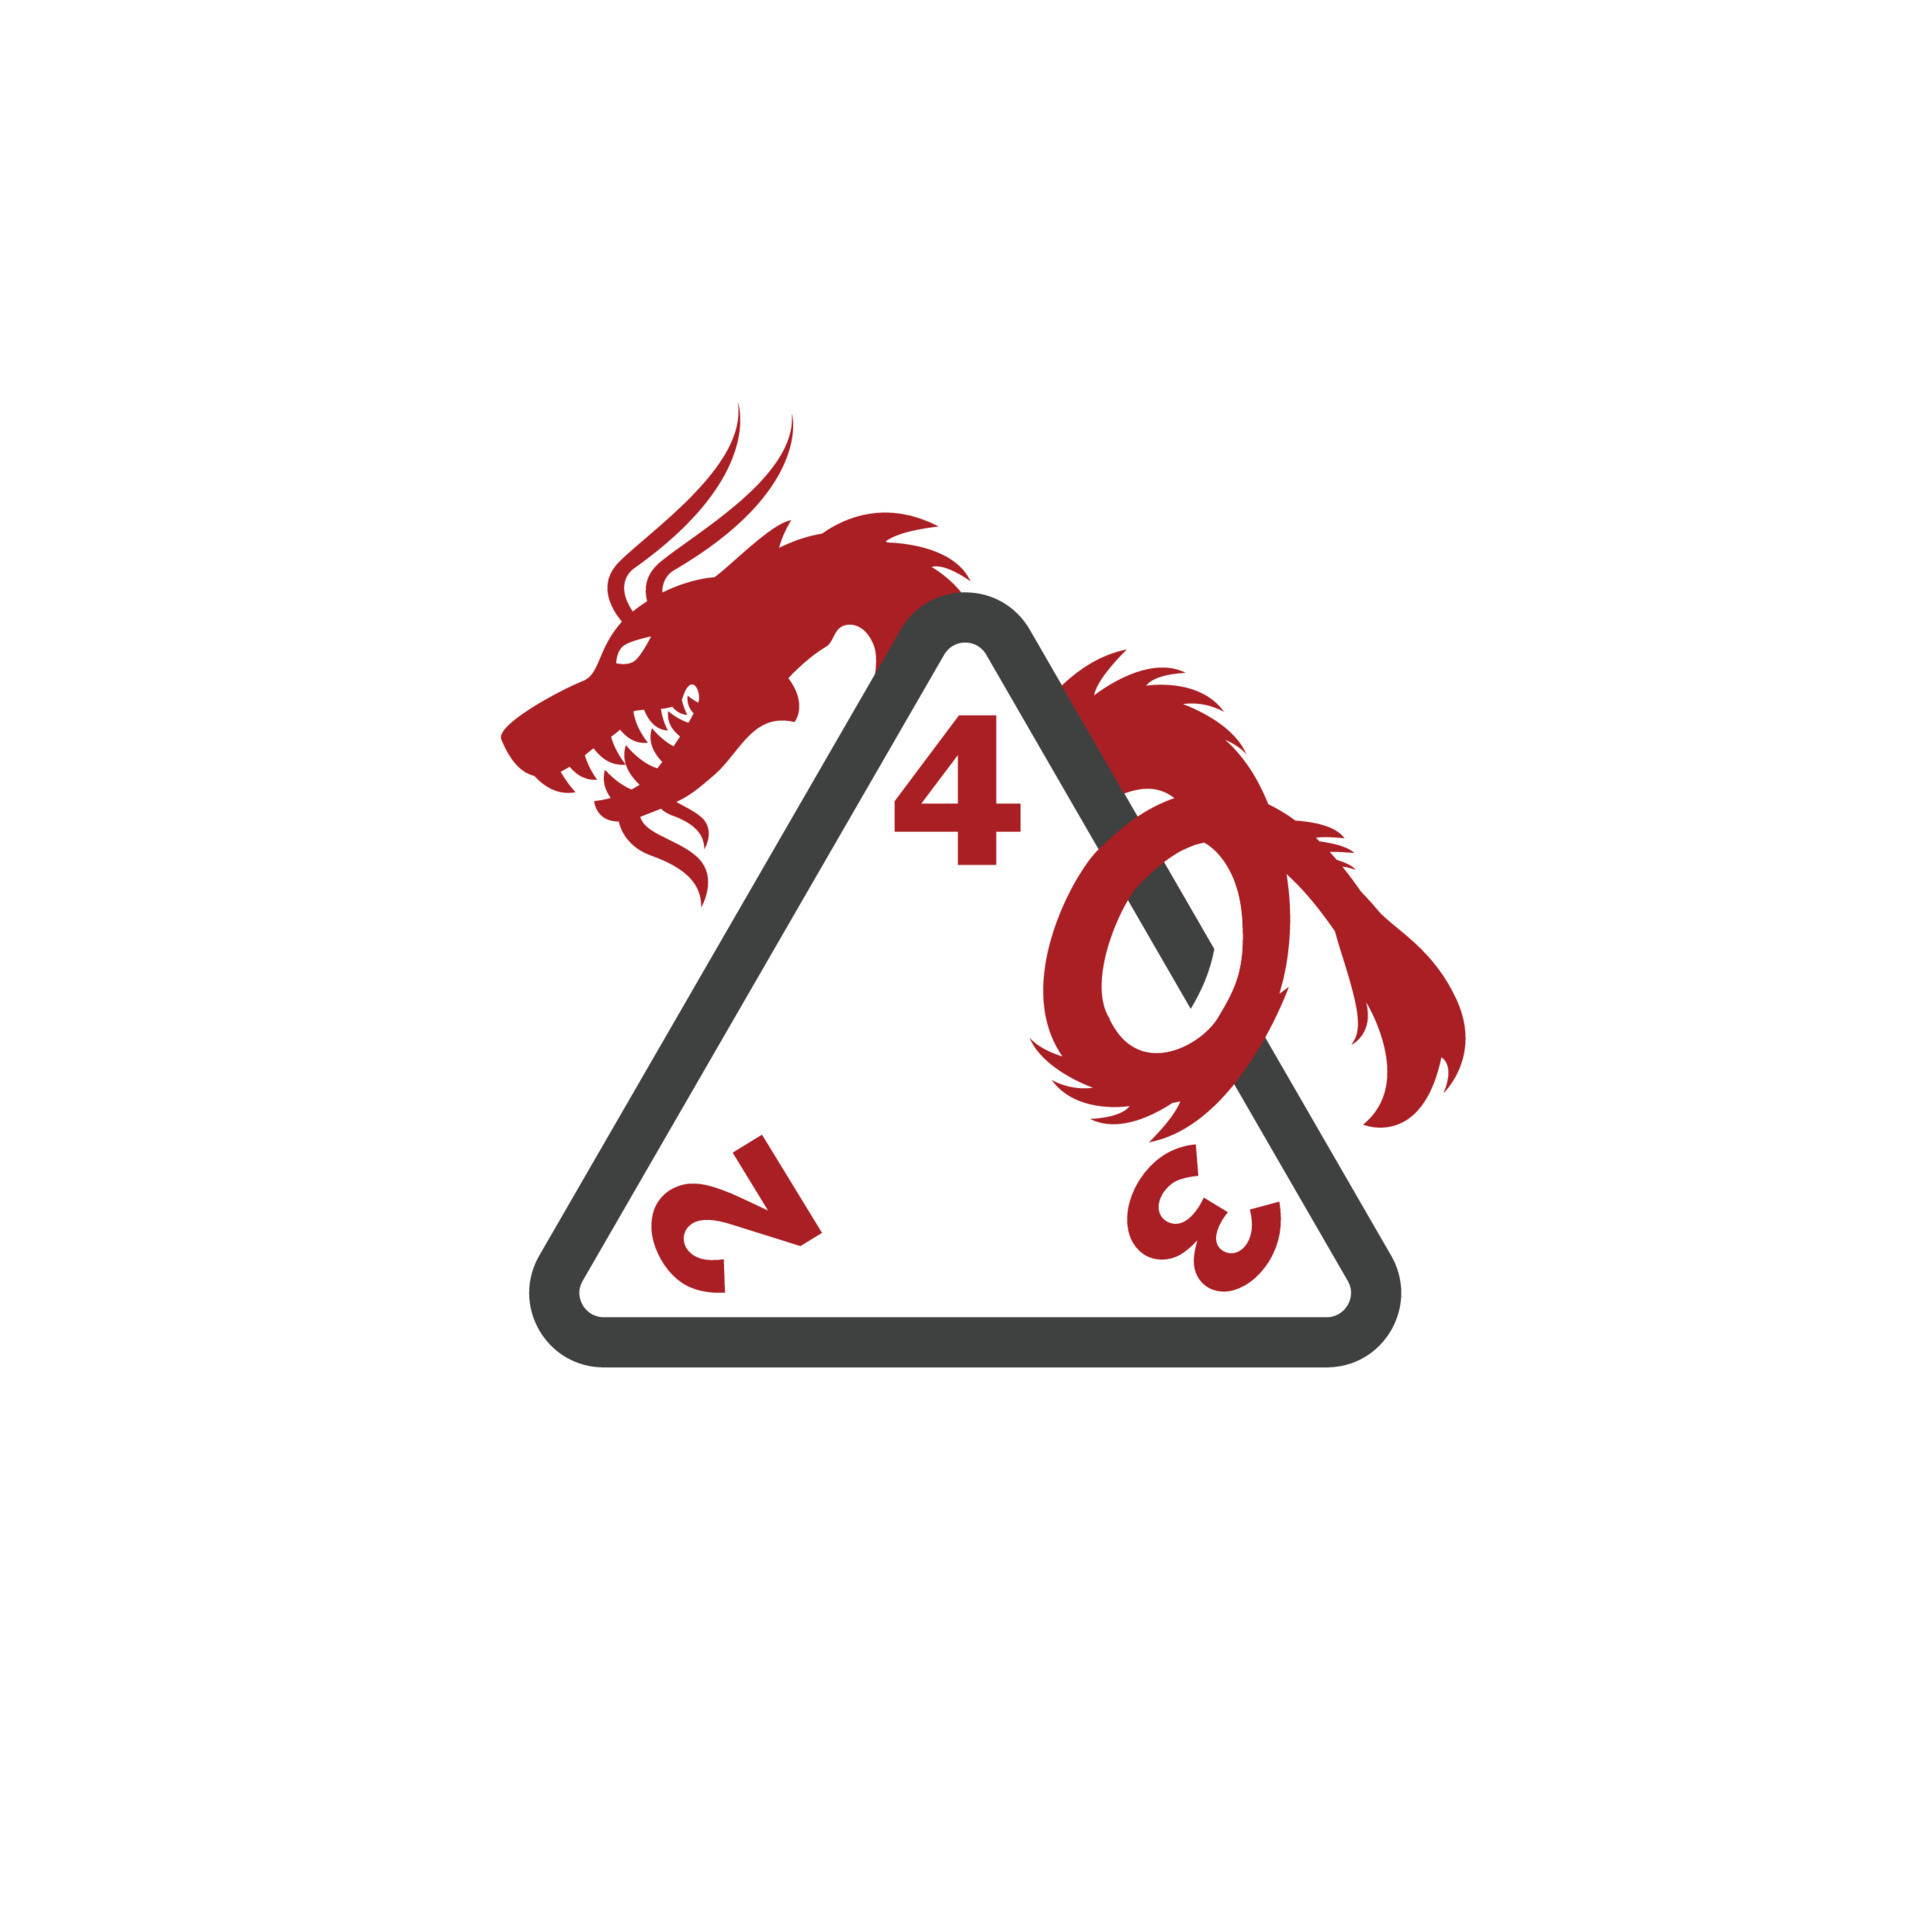 D4 Dice Dragon Game Abstract Mark Pictorial Emblem Logo Symbol